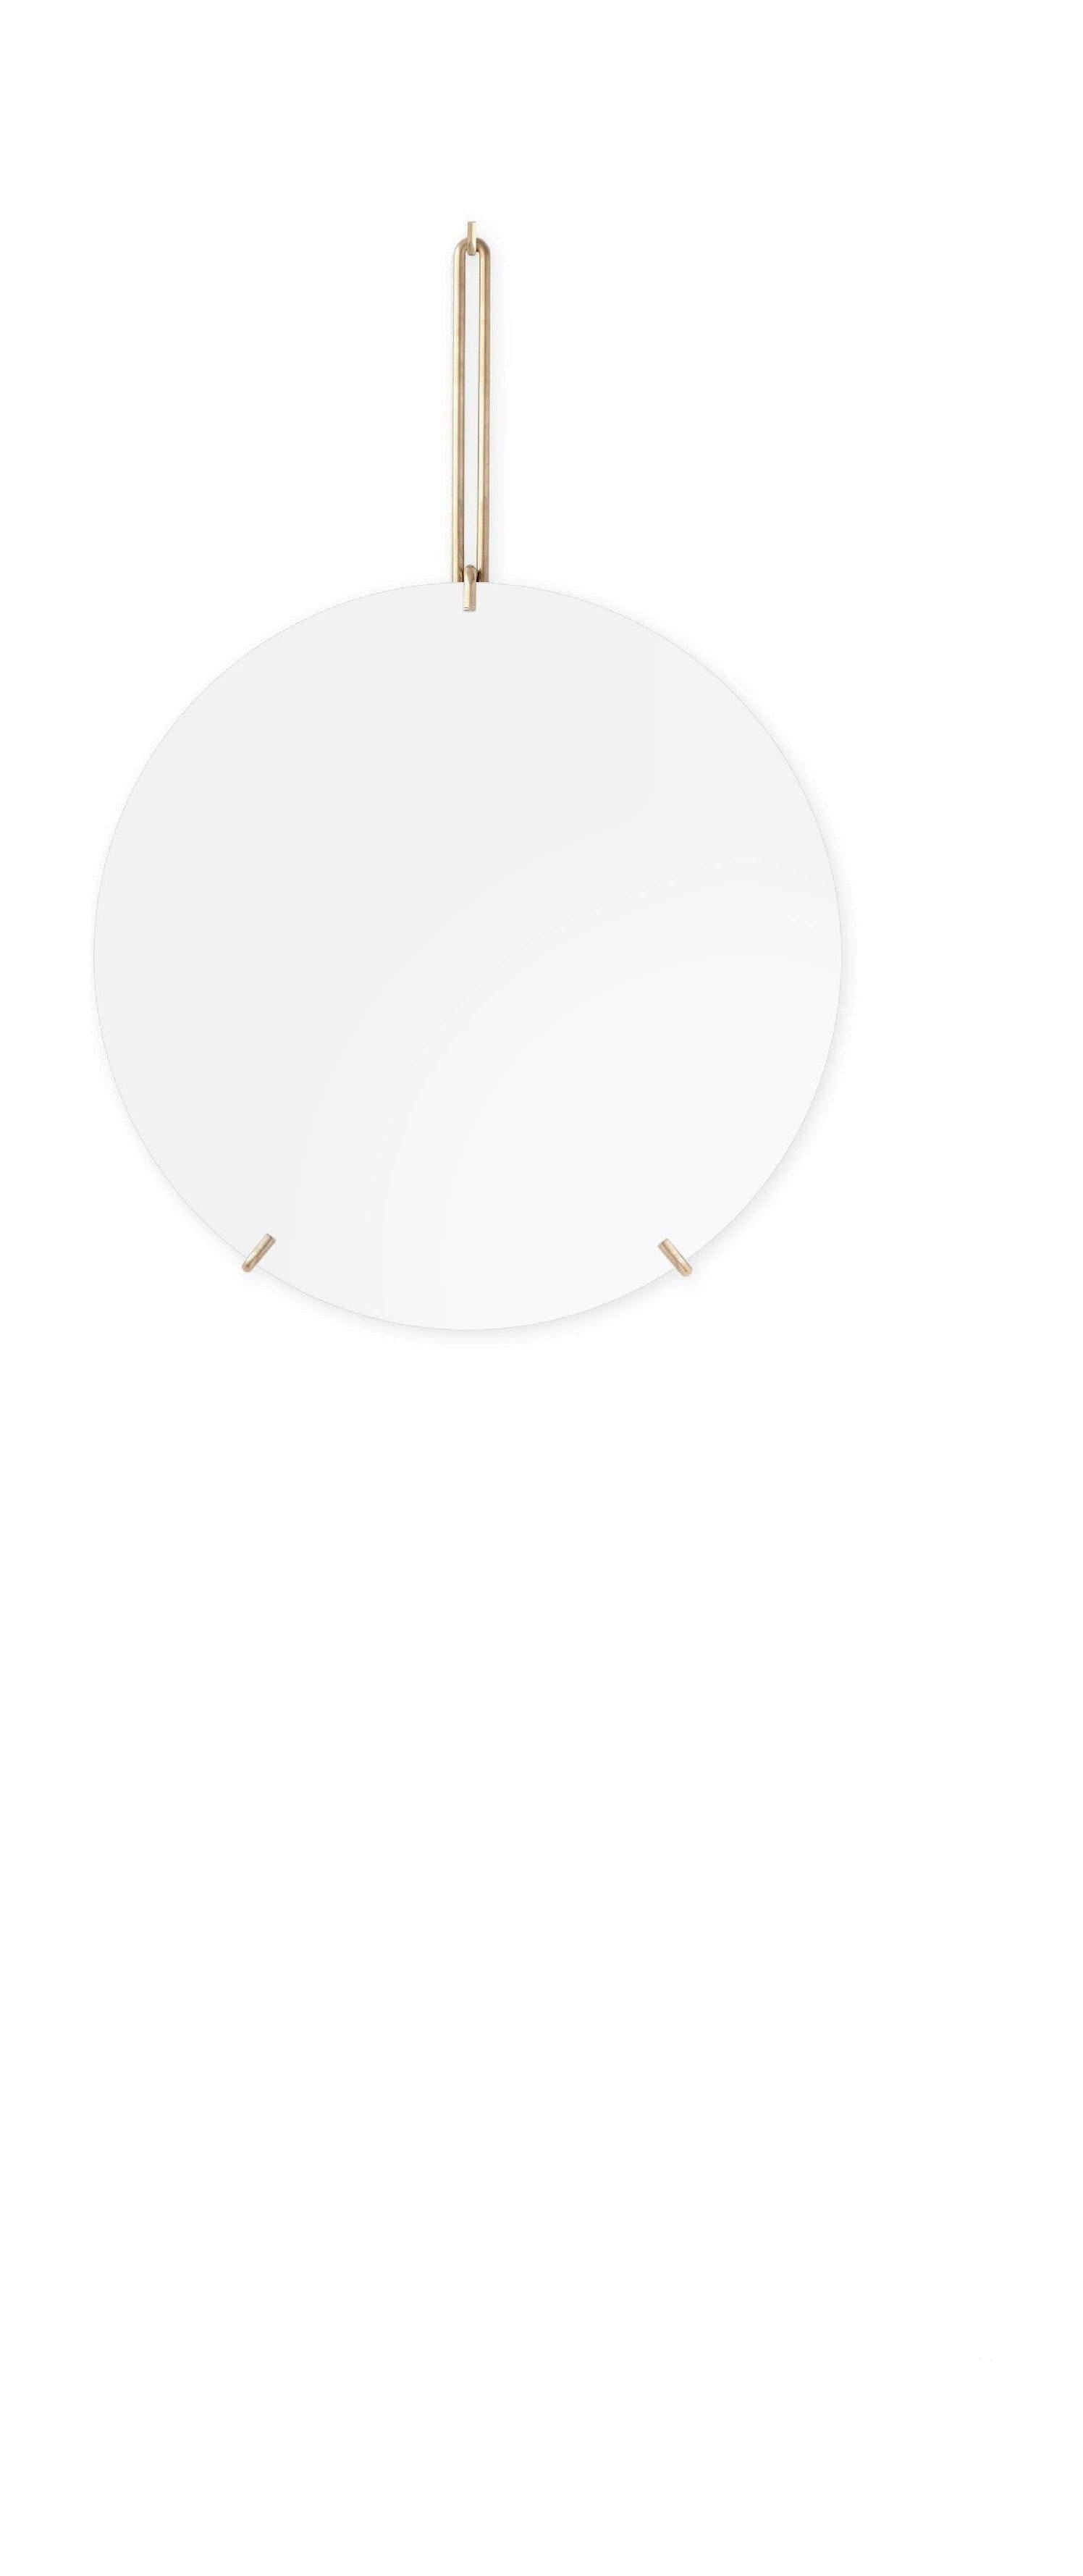 Moebe Wall Mirror ø30 Cm, Brass